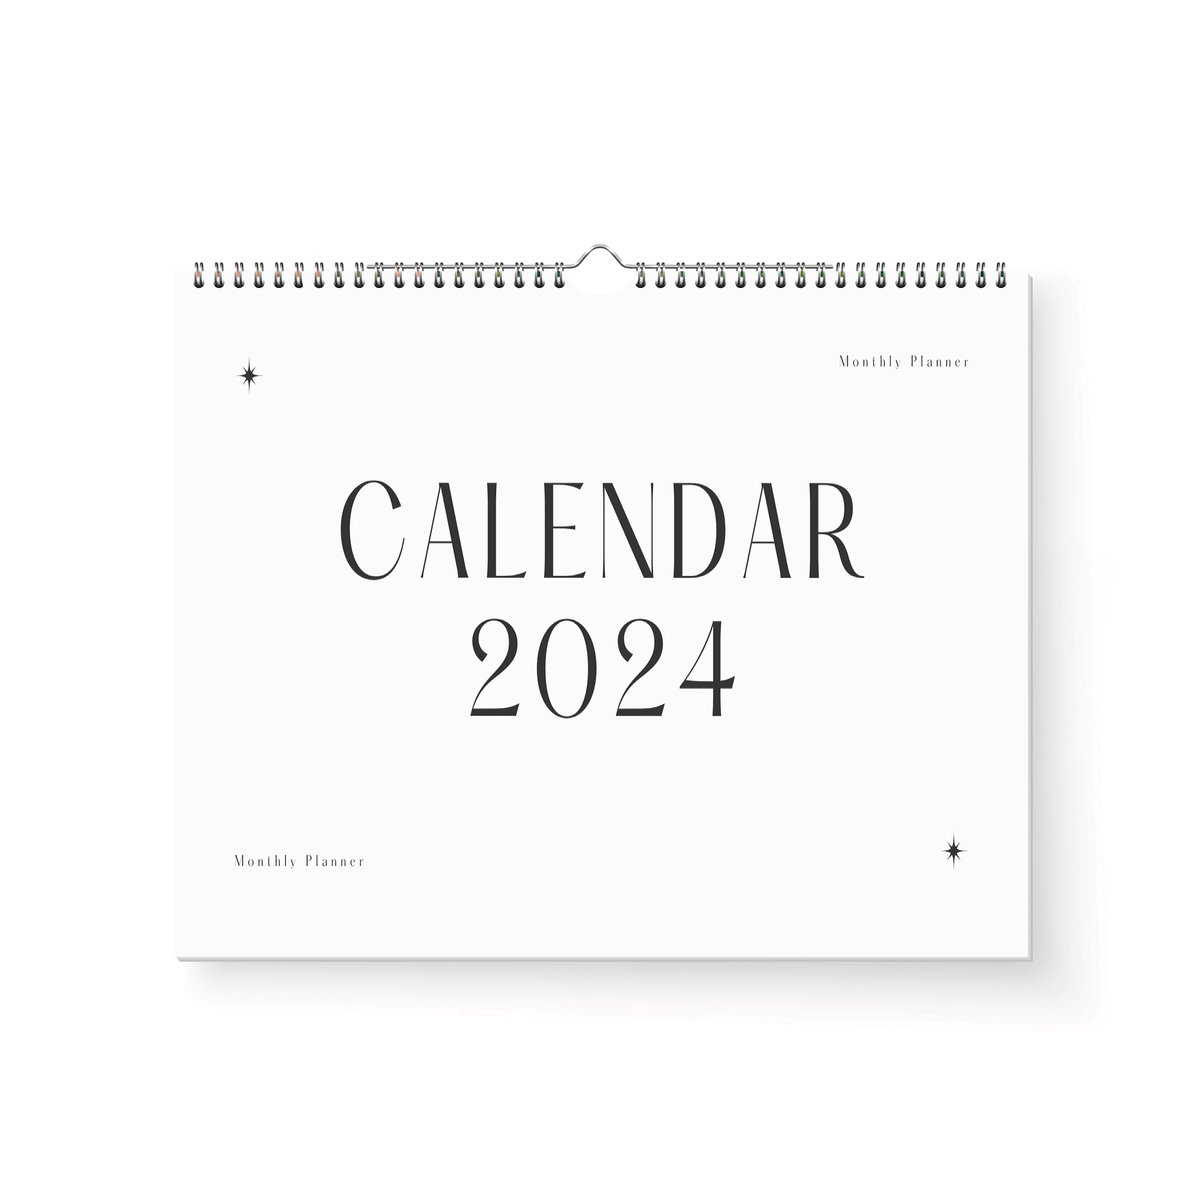 Kalender 2024 - A4 liggend - Jaarplanner 2024 - 300gms papier - inclusief ophanghaakje - inclusief transparant voorblad